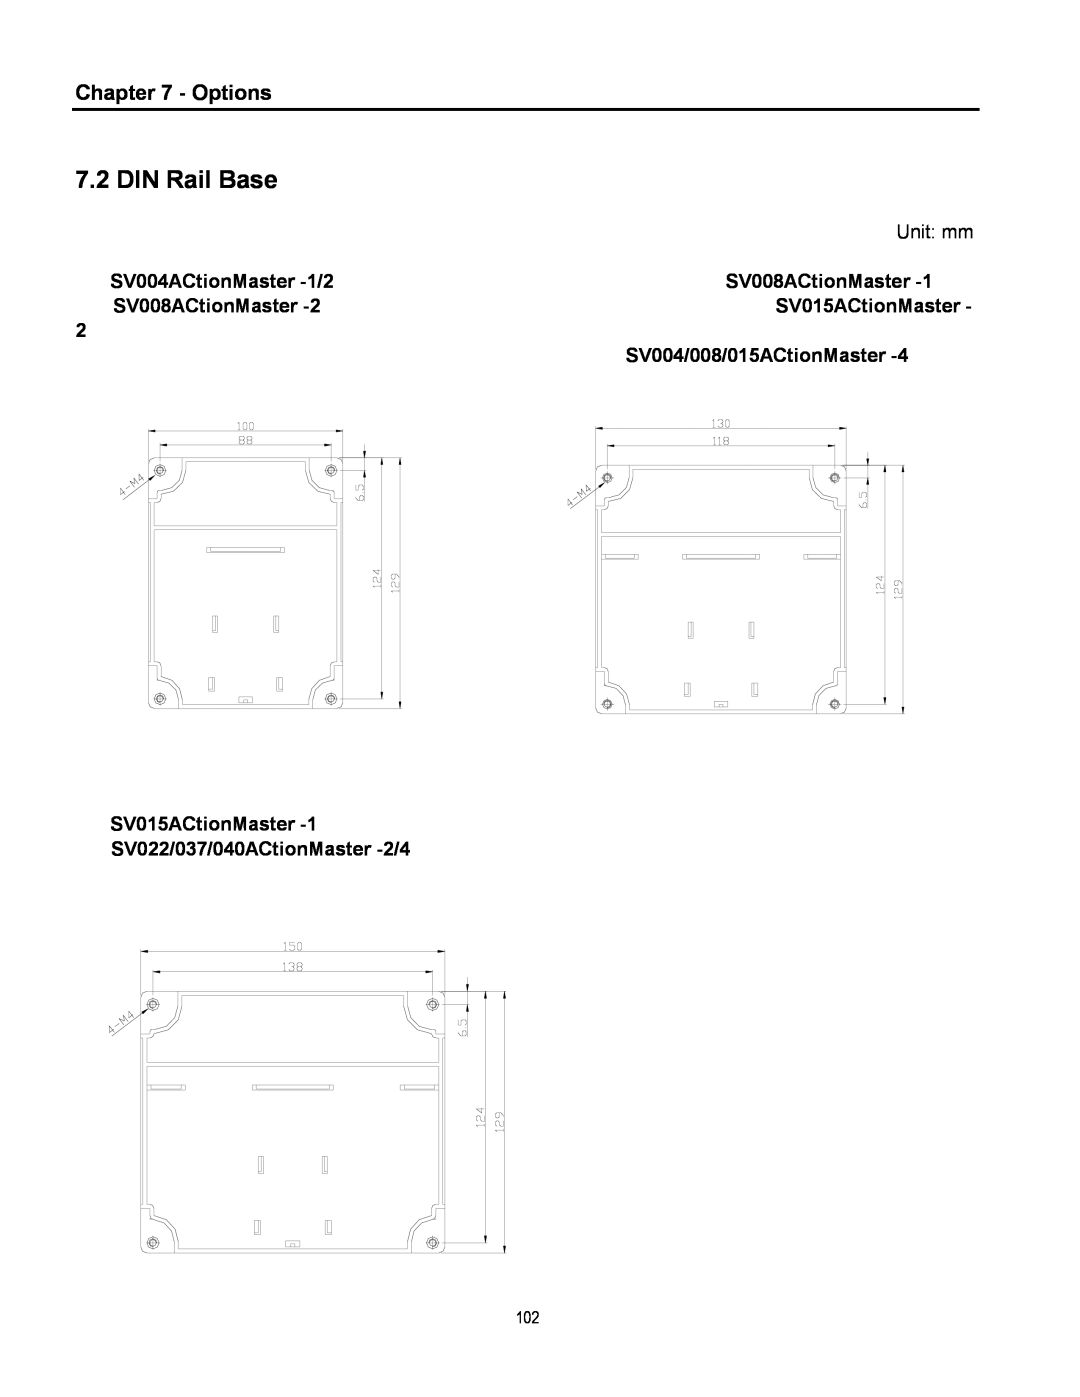 Cleveland Range inverter DIN Rail Base, Options, Unit mm, SV004ACtionMaster -1/2, SV008ACtionMaster, SV015ACtionMaster 